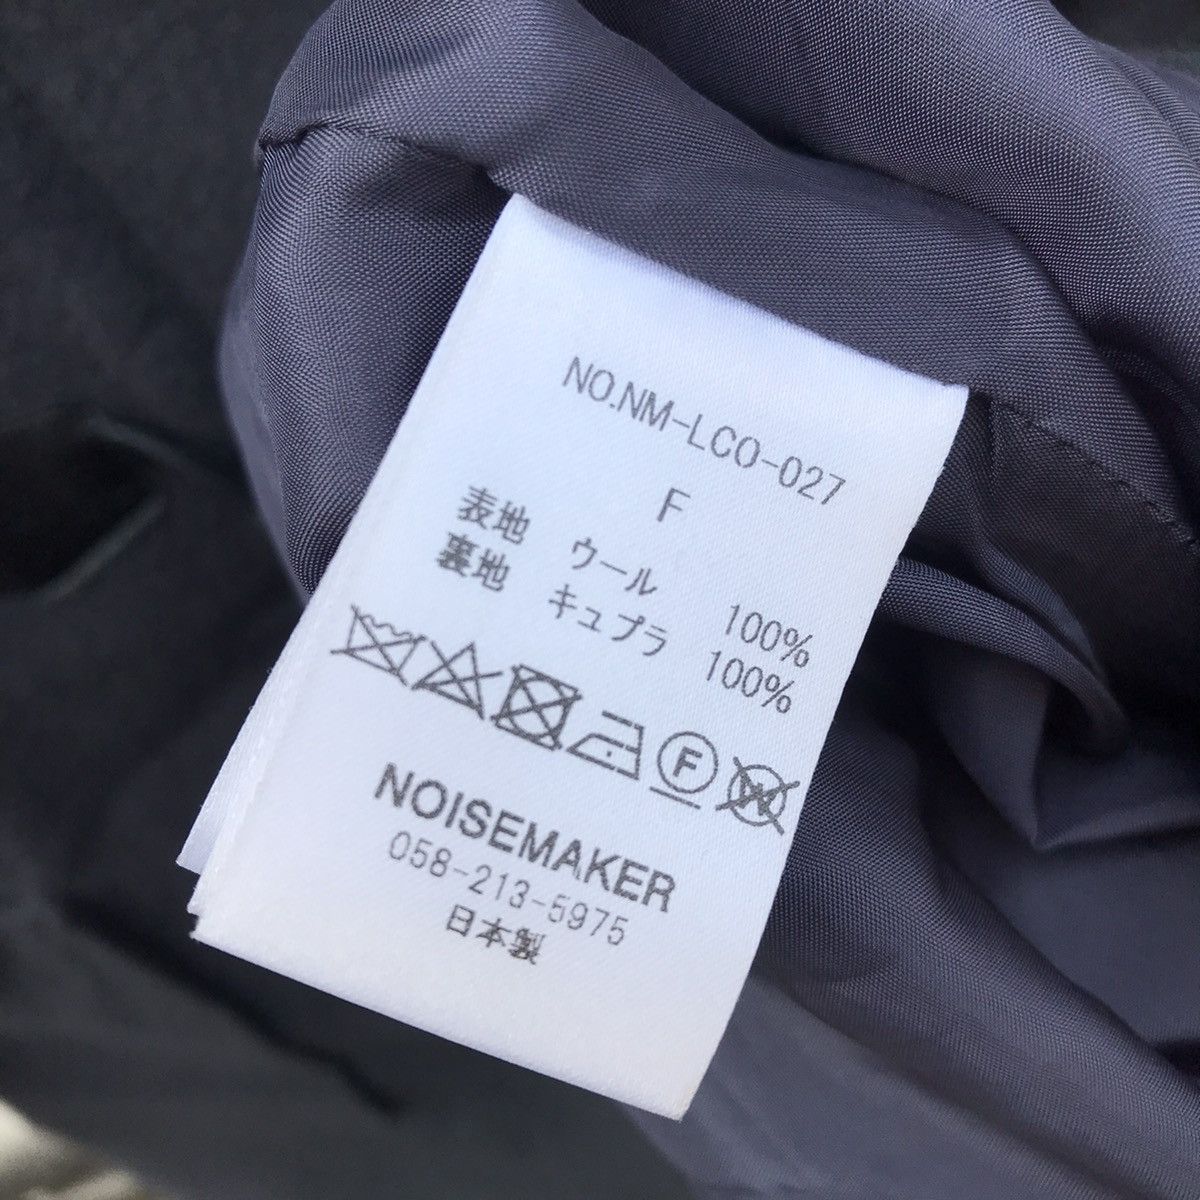 Japanese Brand - Truno by Noise Maker japan coat jacket undercover cdg - 3